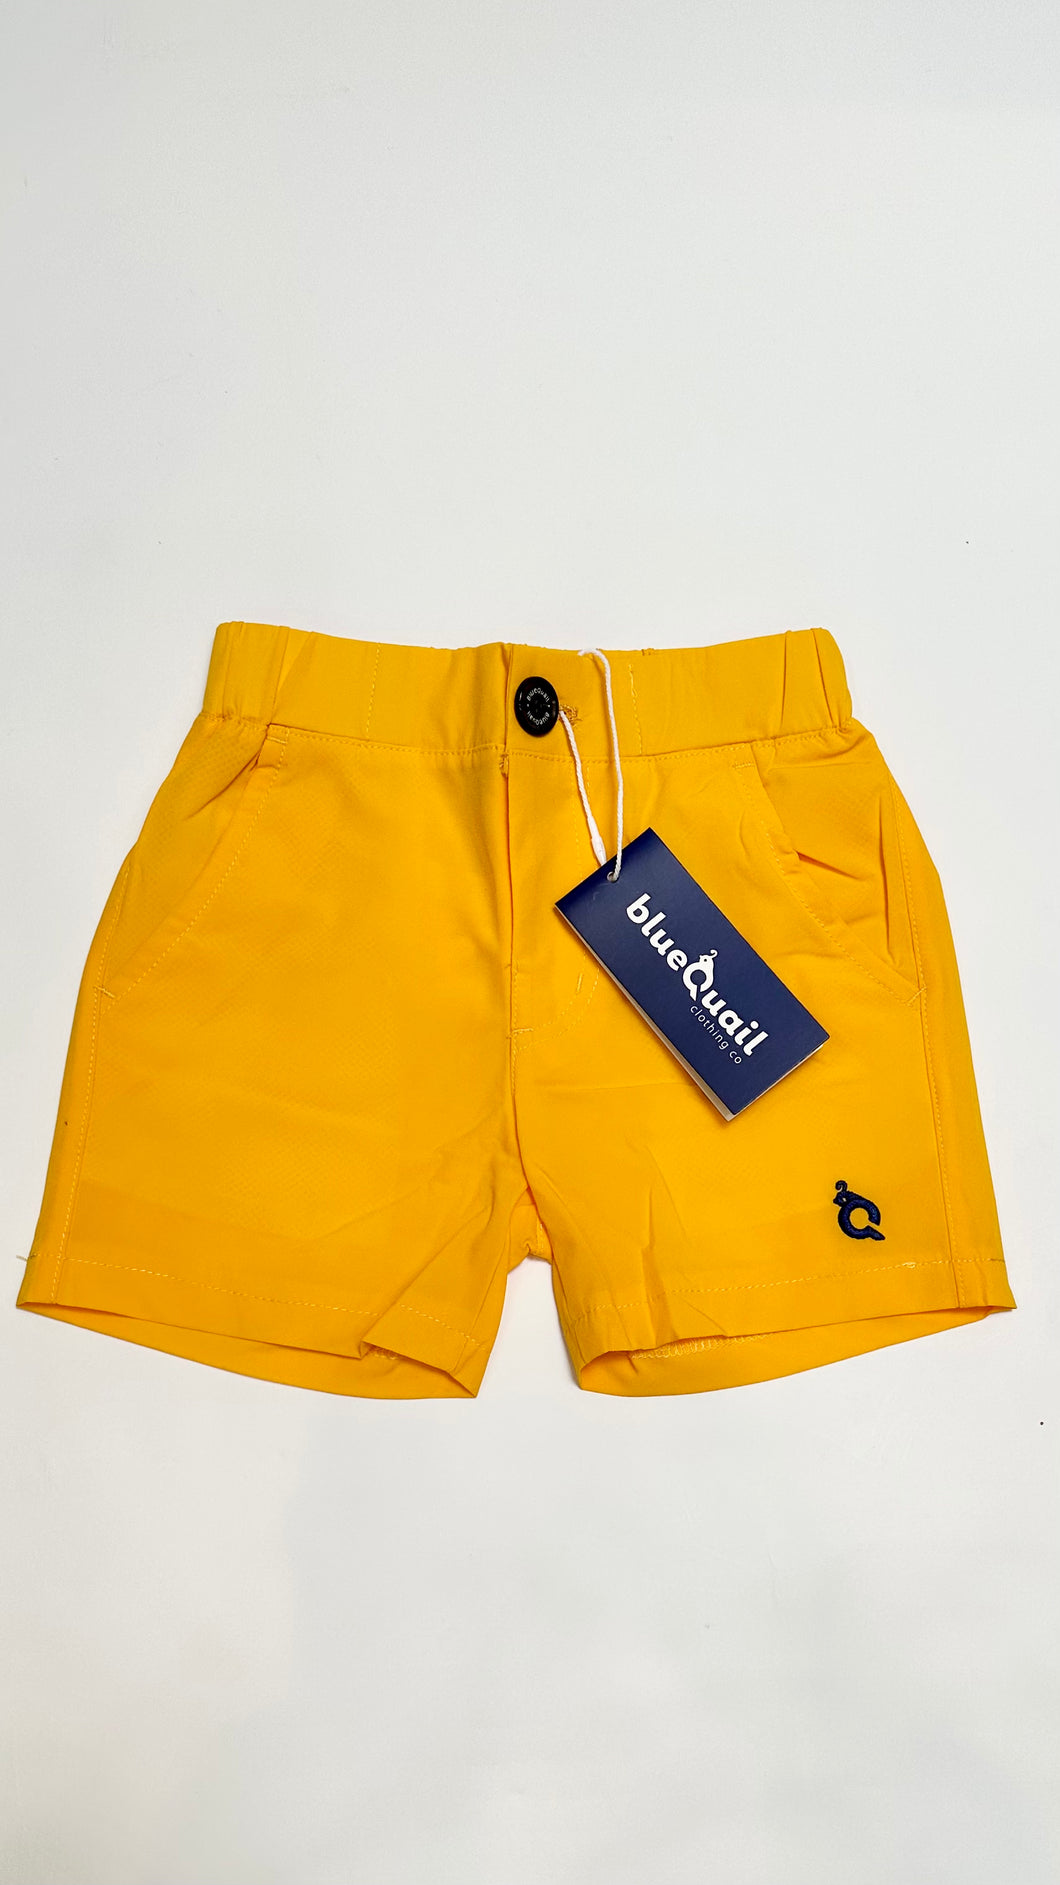 BlueQuail Citrus Shorts